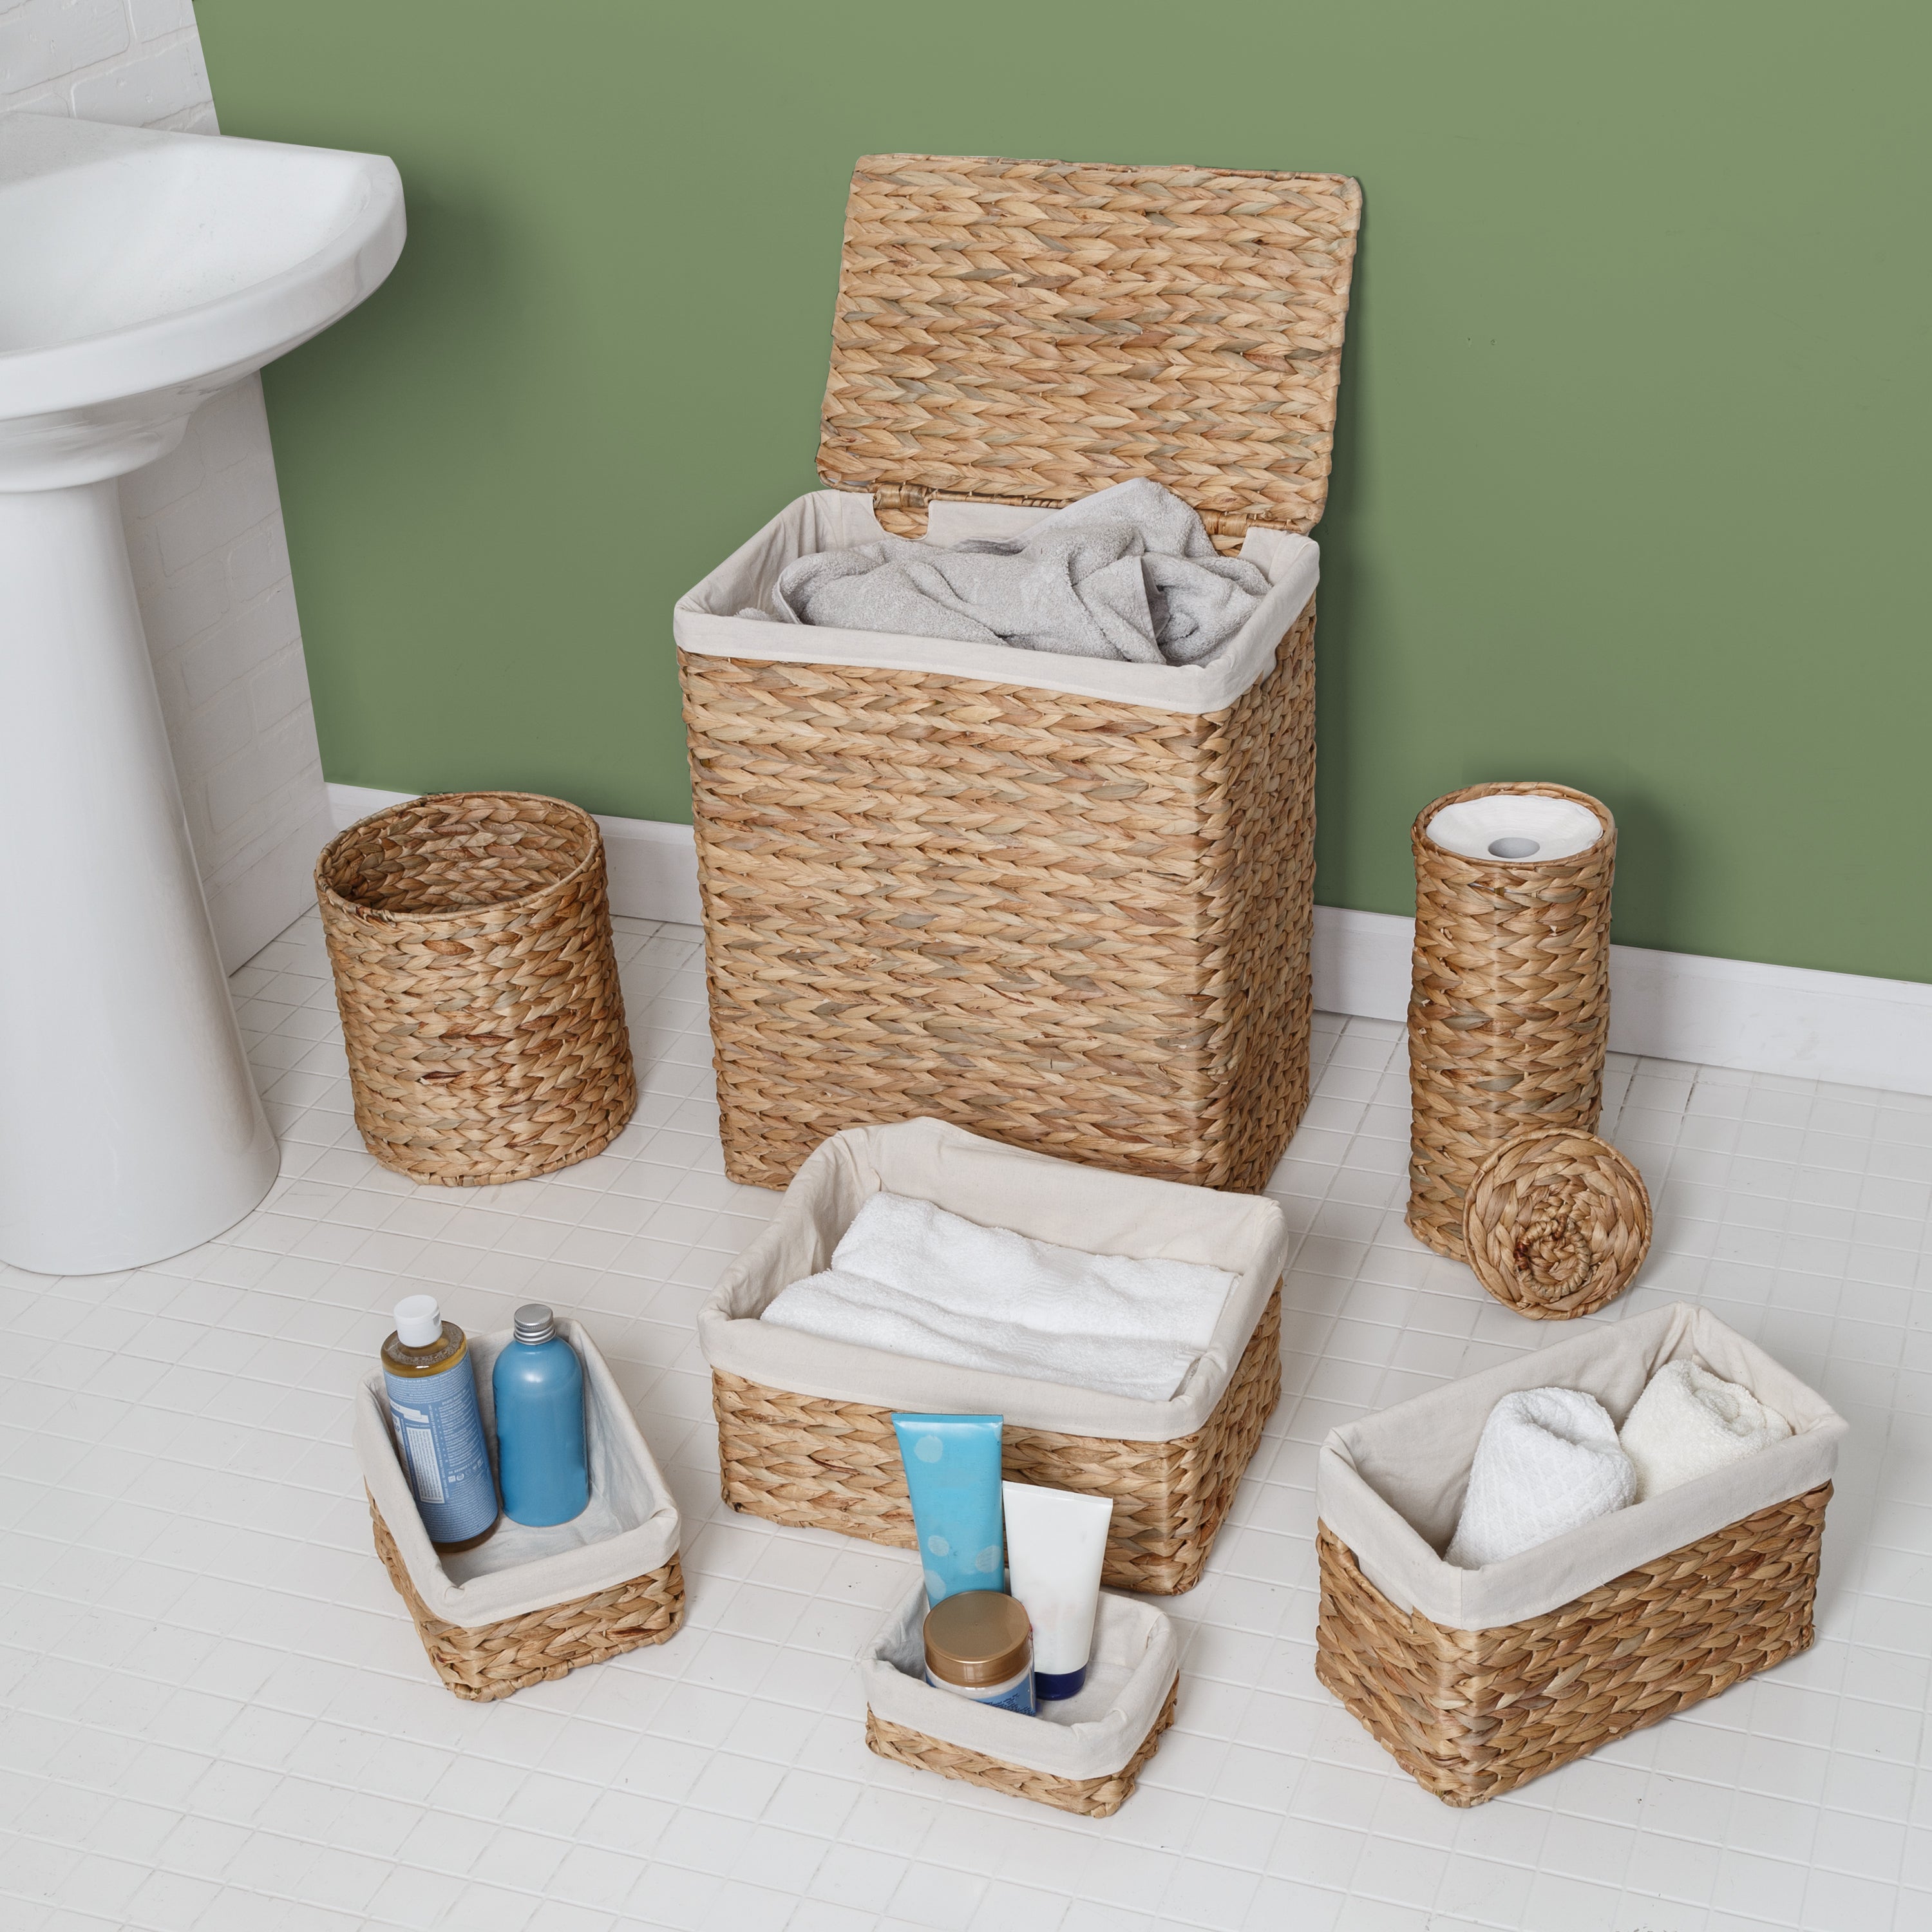 Wicker Baskets, Rattan Basket, Rectangular Basket, Small Basket with Handle, Wicker Baskets for Storage, Hyacinth Storage Baskets for Bathroom